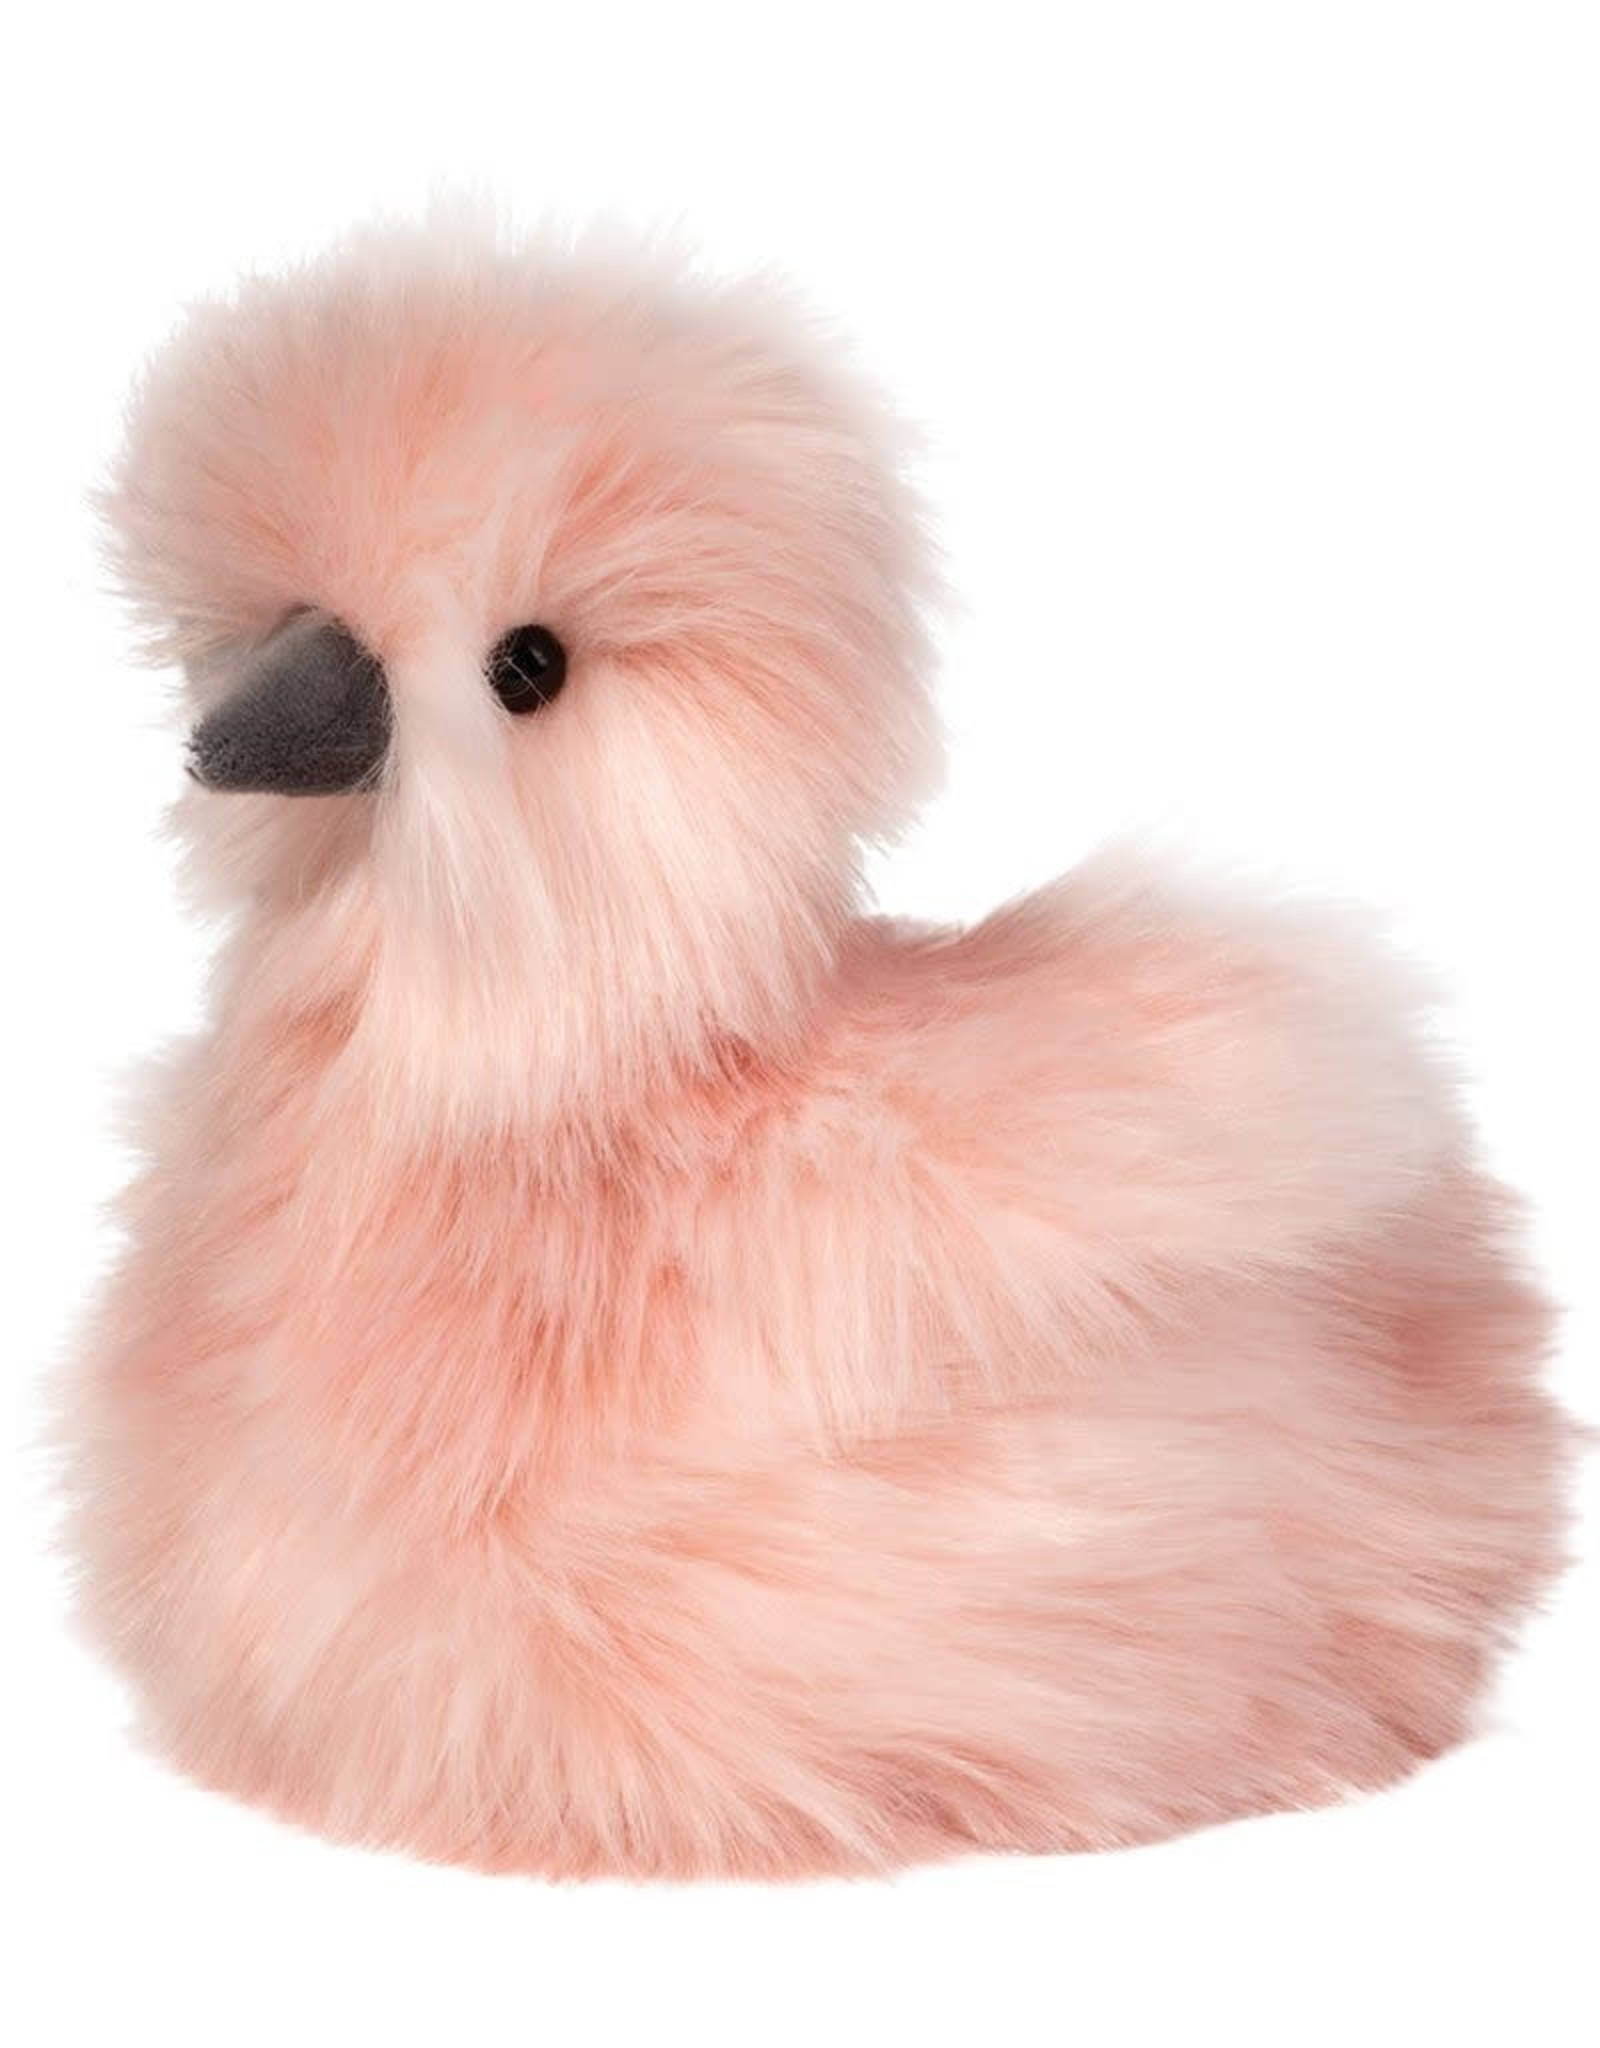 Douglas Mara Pink Silkie Chick